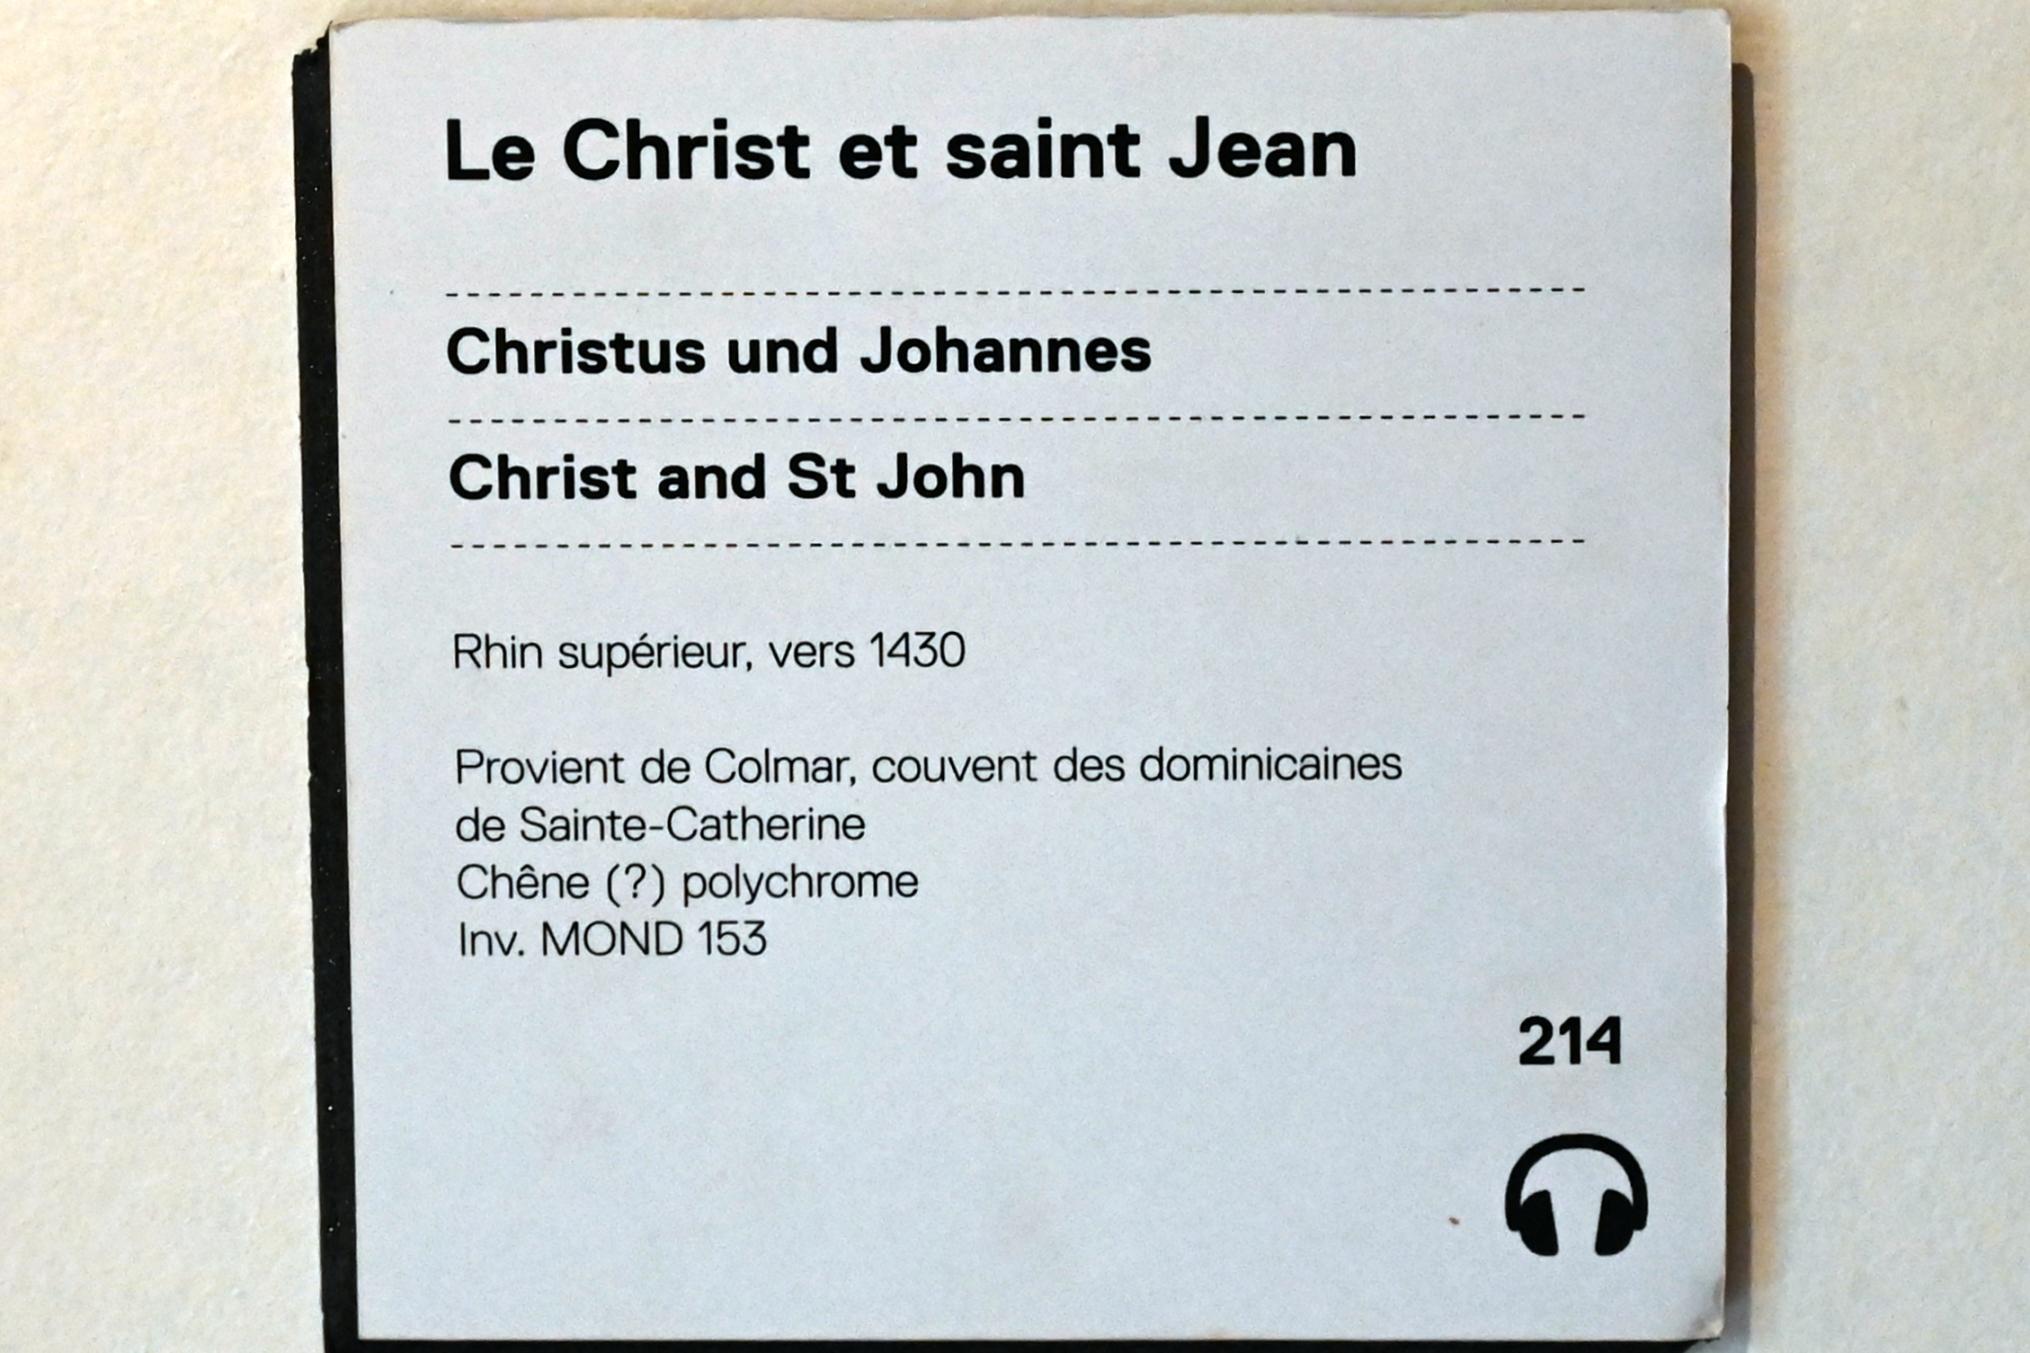 Christus und Johannes, Colmar, ehem. Dominikanerklosters, jetzt Straßburg, Musée de l’Œuvre Notre-Dame (Frauenhausmuseum), um 1430, Bild 4/4